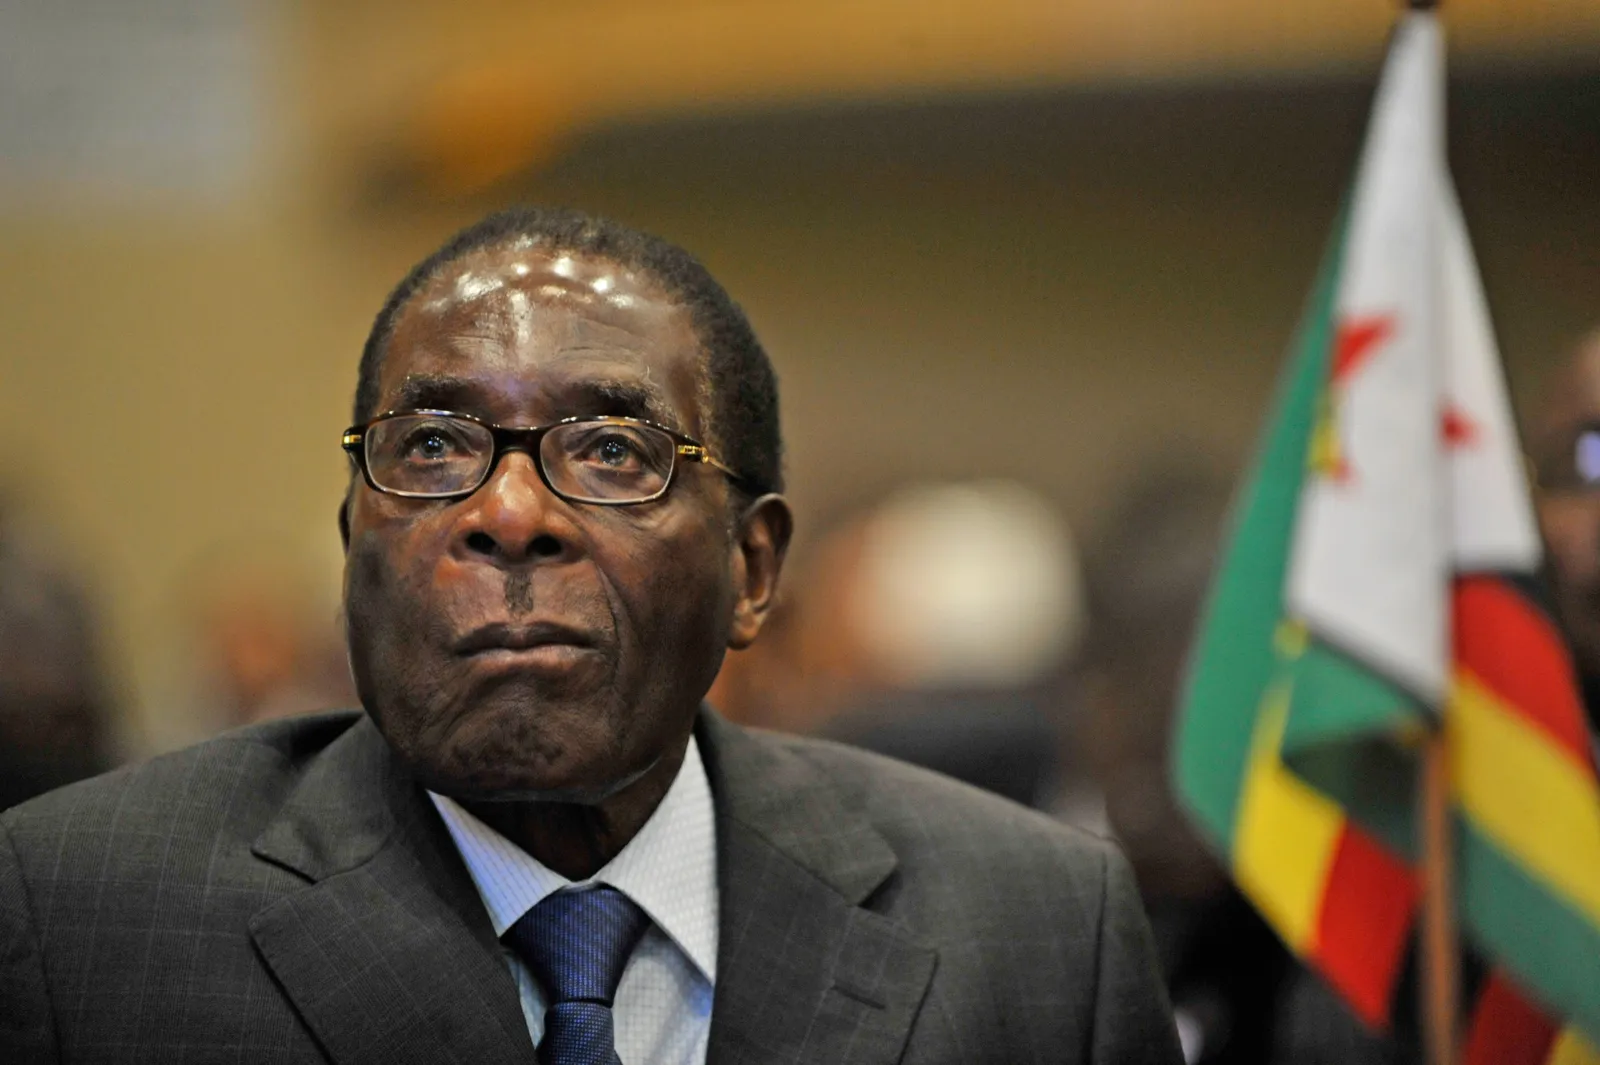 Robert Mugabe’s son apprehended for alleged property damage